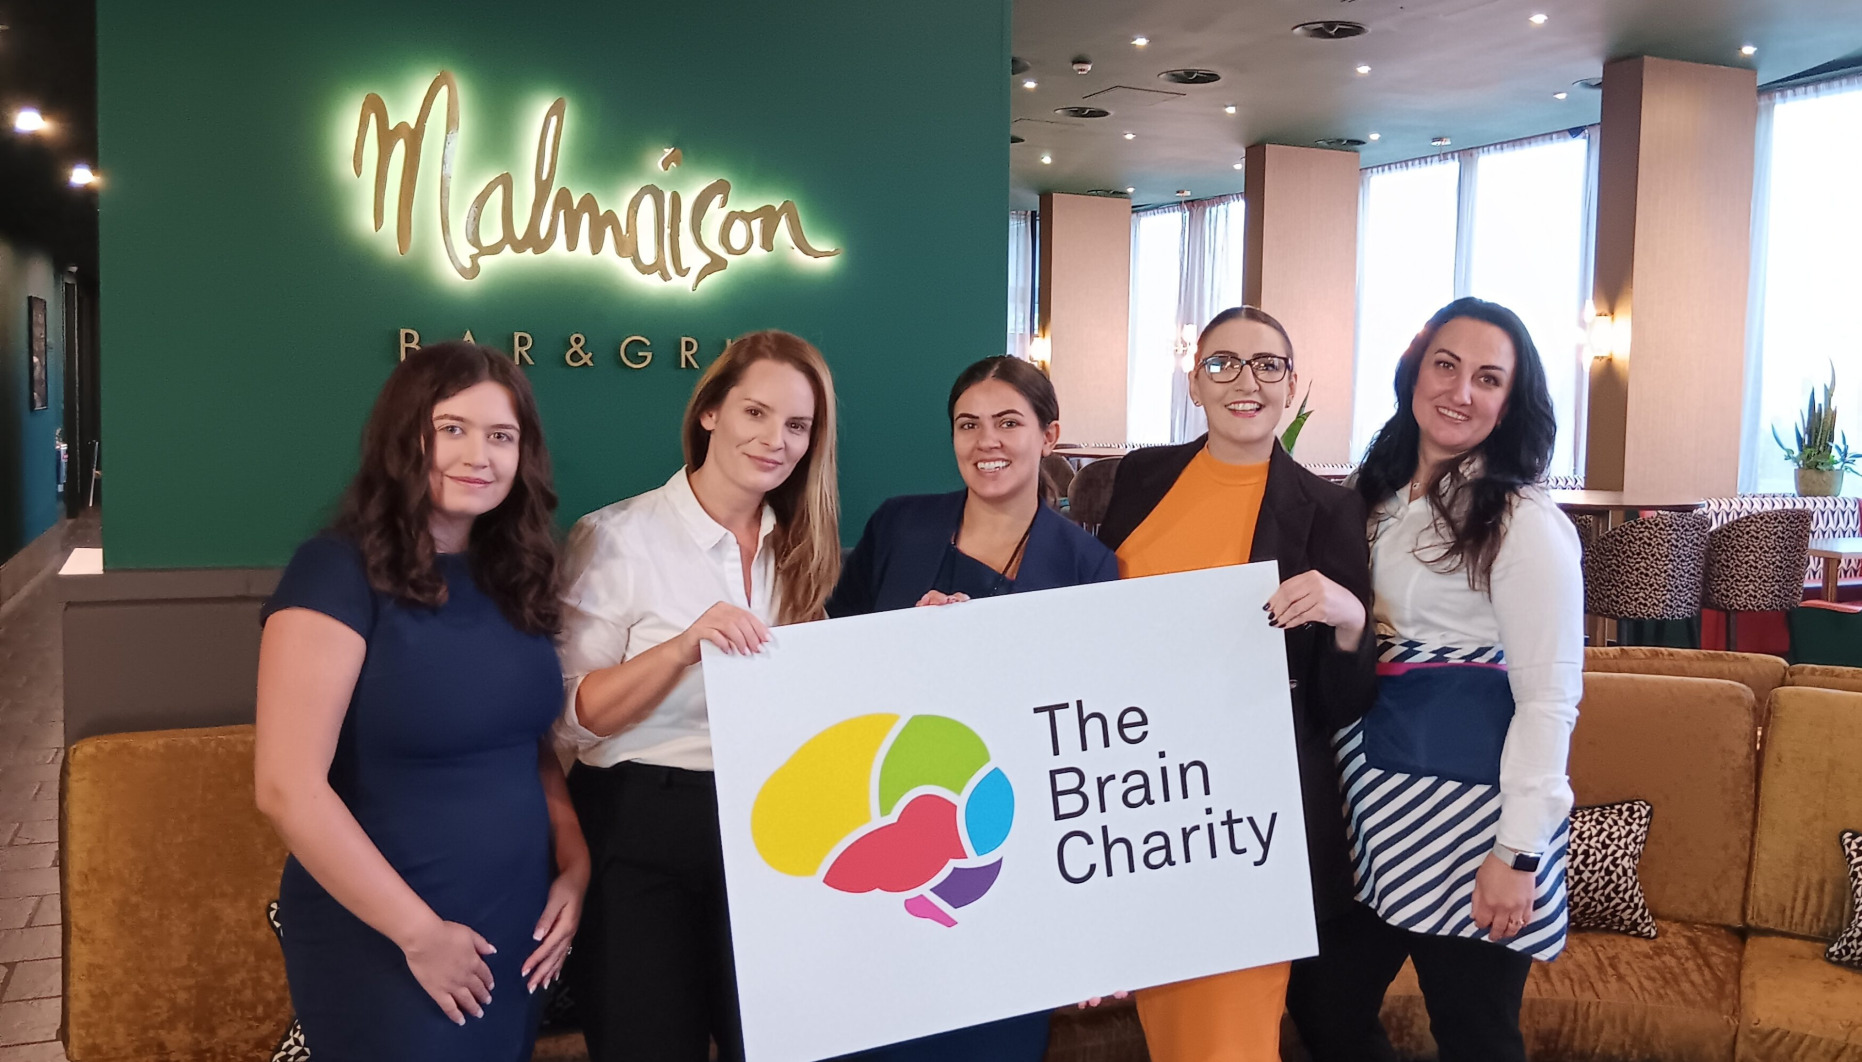 Malmaison Liverpool team hold The Brain Charity's logo